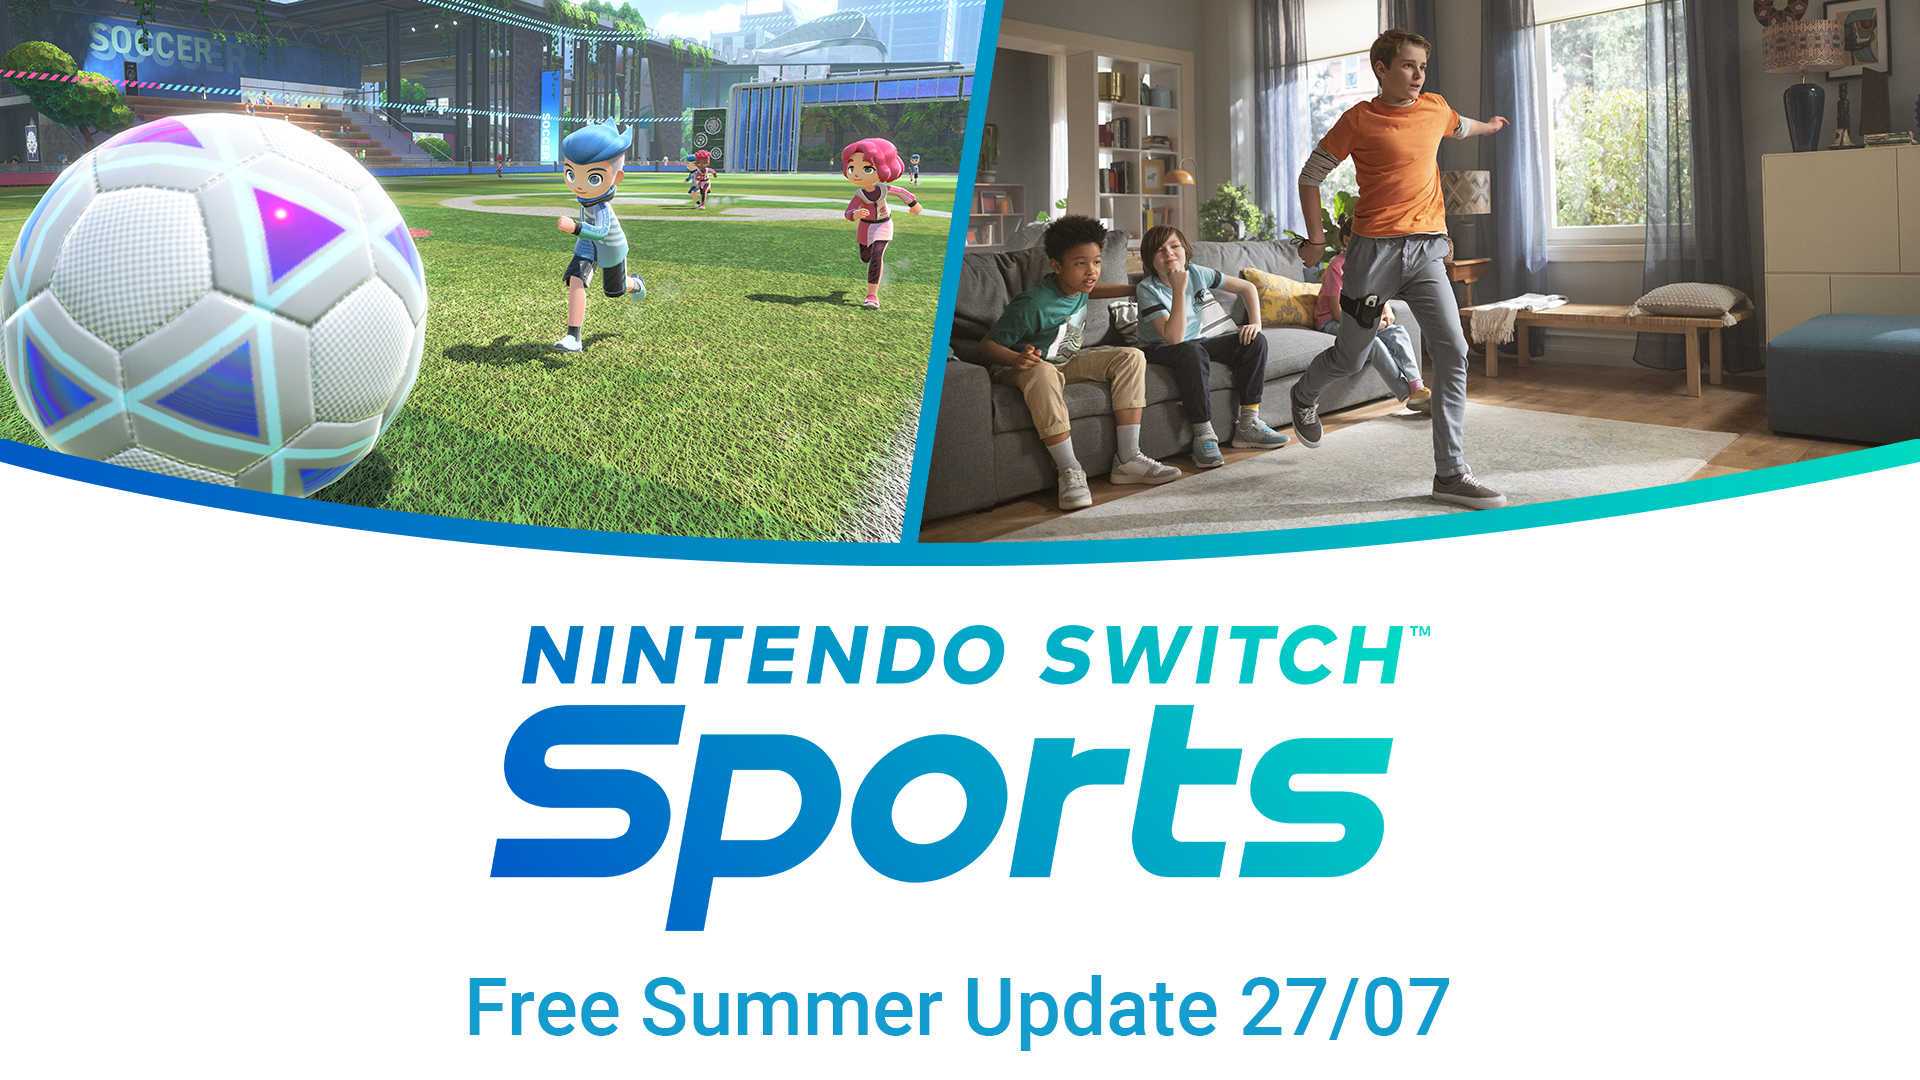 Buy Nintendo Switch Sports with Leg Strap (Nintendo Switch, 2022